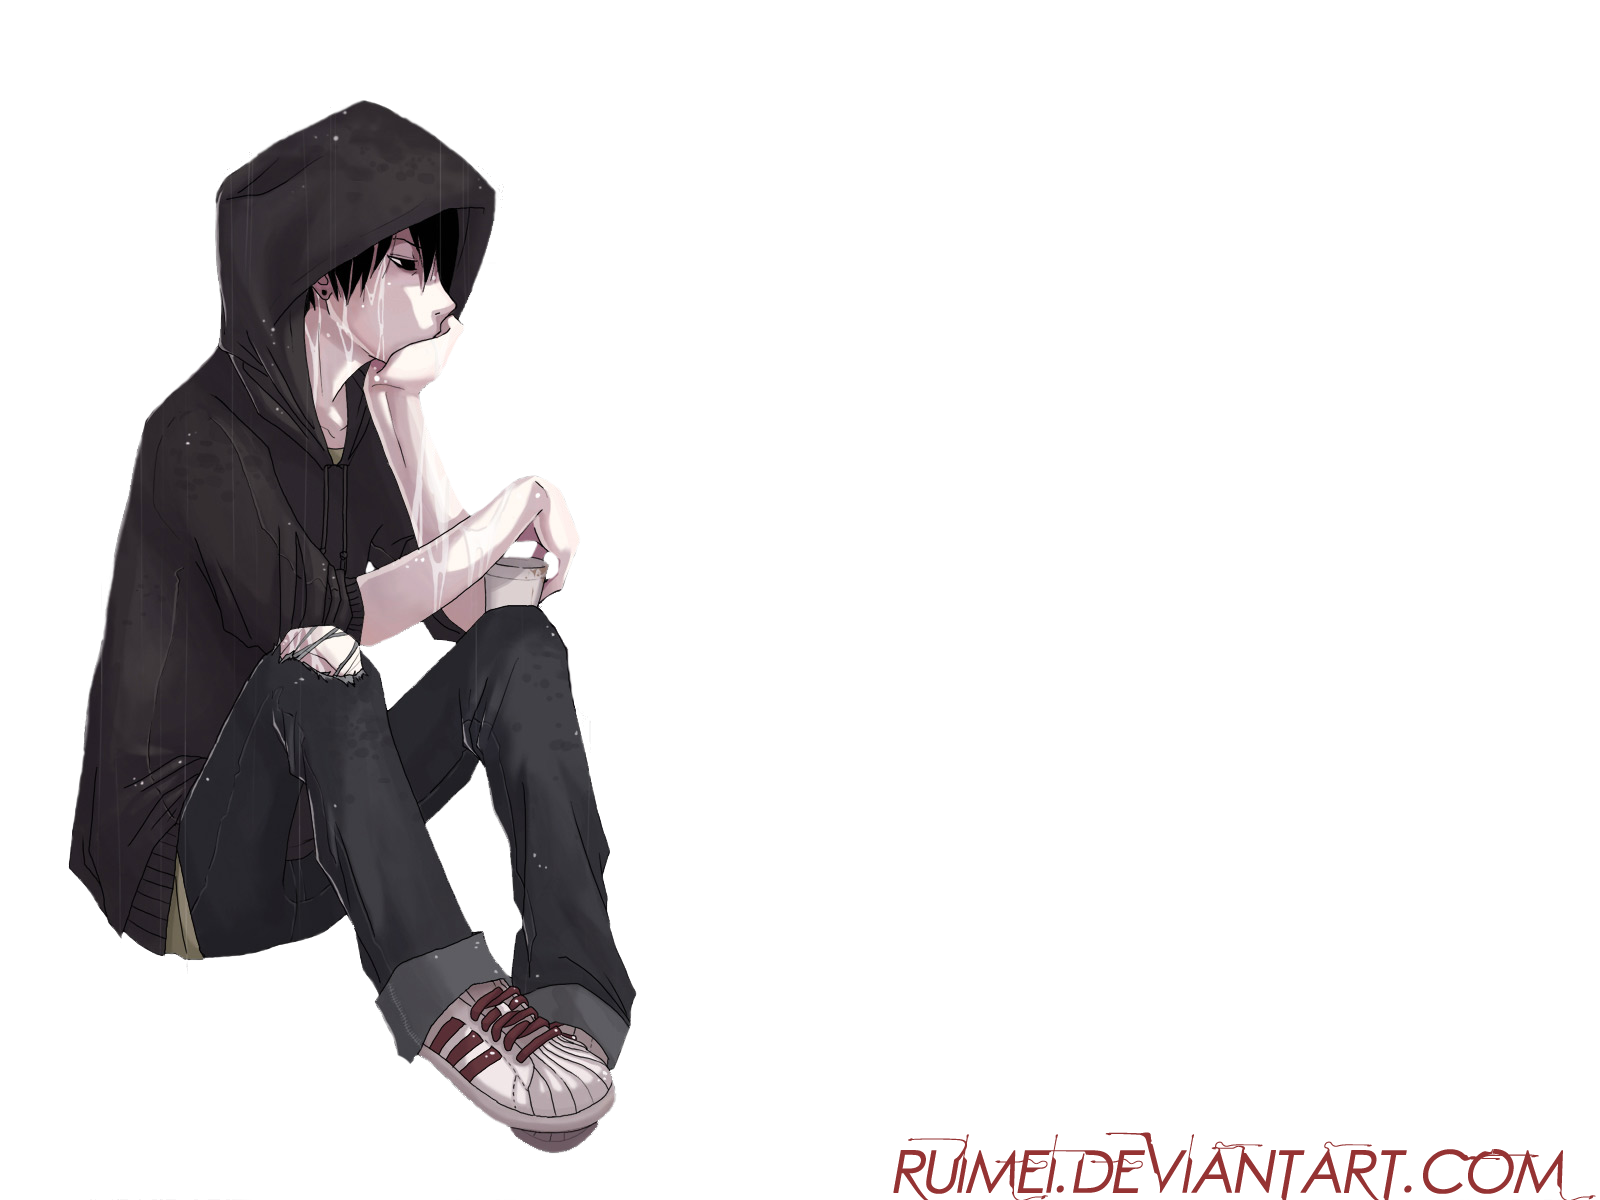 Sad Boy Anime Pfp Depressed - 🖤 Sad Aesthetic Anime Pfp - 2021 / We did